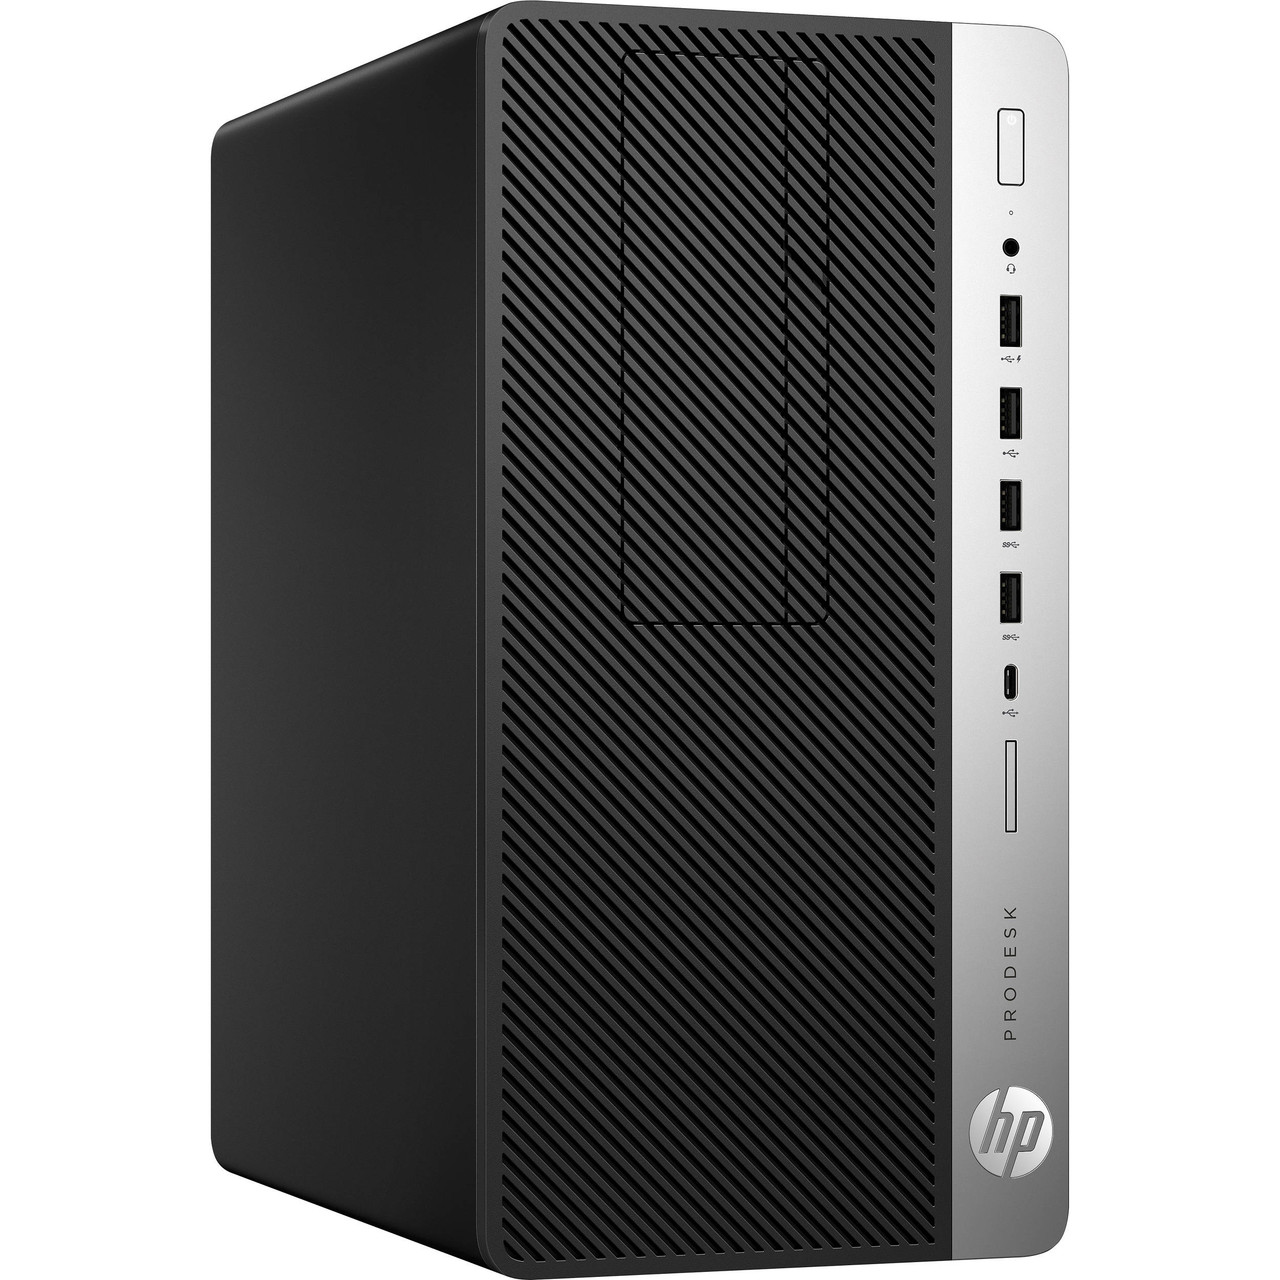 HP Prodesk 600 G4 Desktop Intel Core i5 2.10 GHz 8 GB 500 GB Windows 10 Pro | Refurbished